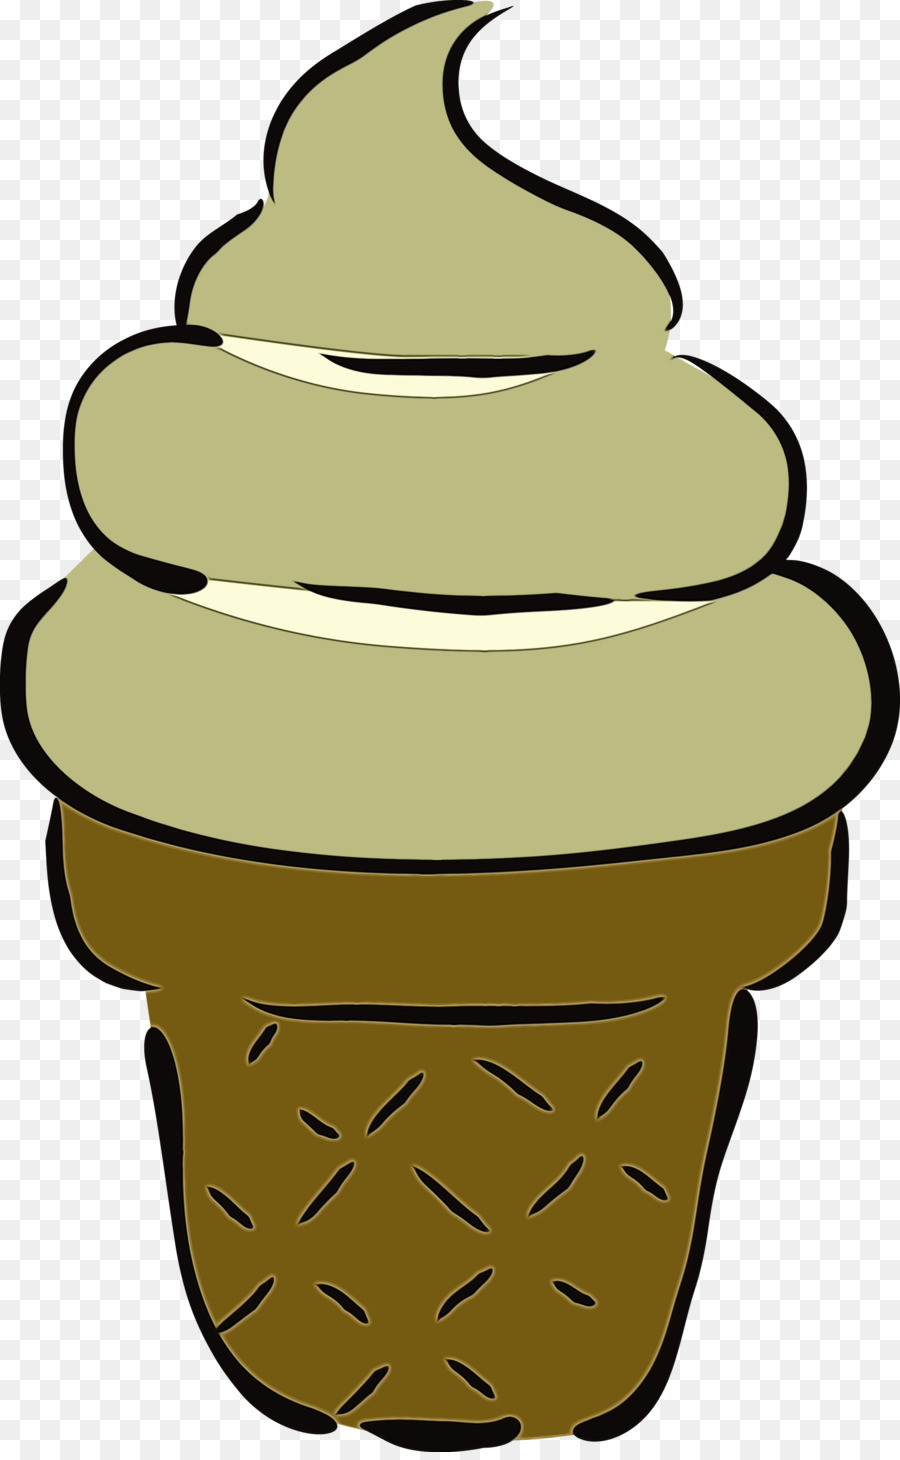 ice cream cone yellow meter cone headgear